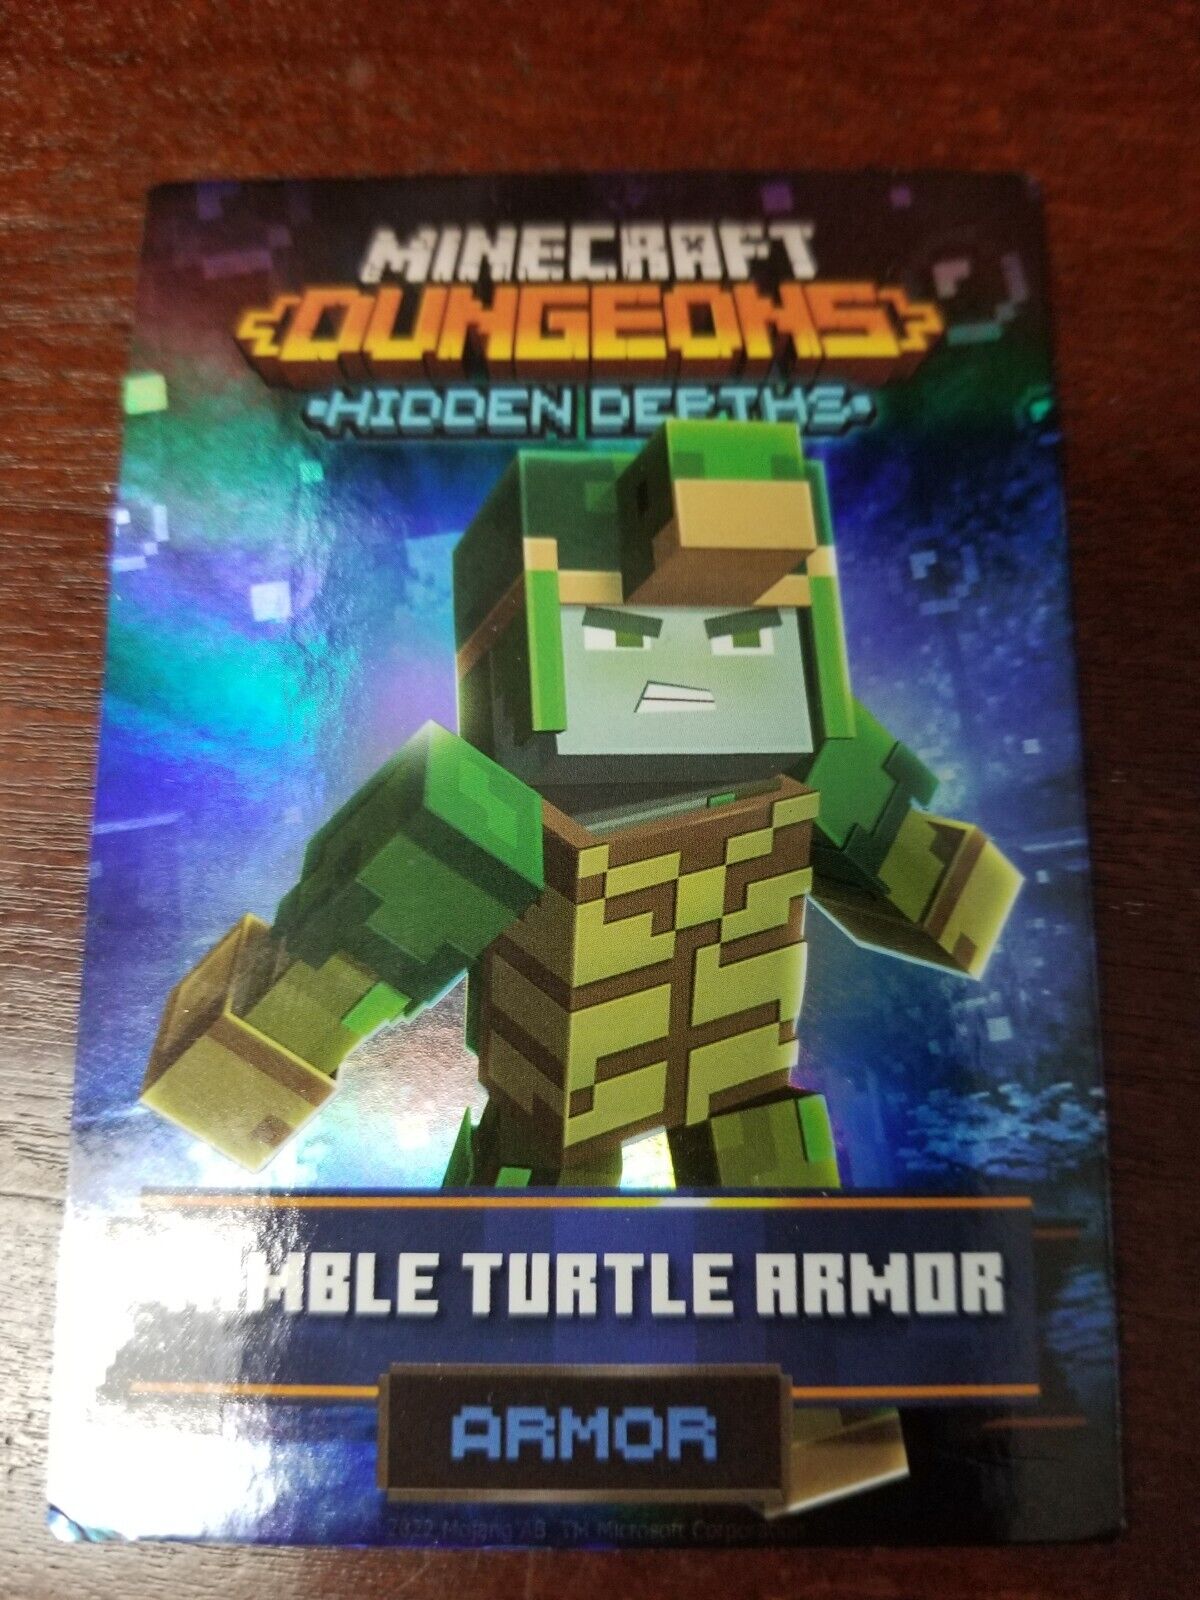 2021 Minecraft Dungeons Arcade Vending Cards - Series 2 Nimble Turtle Armor 07mp